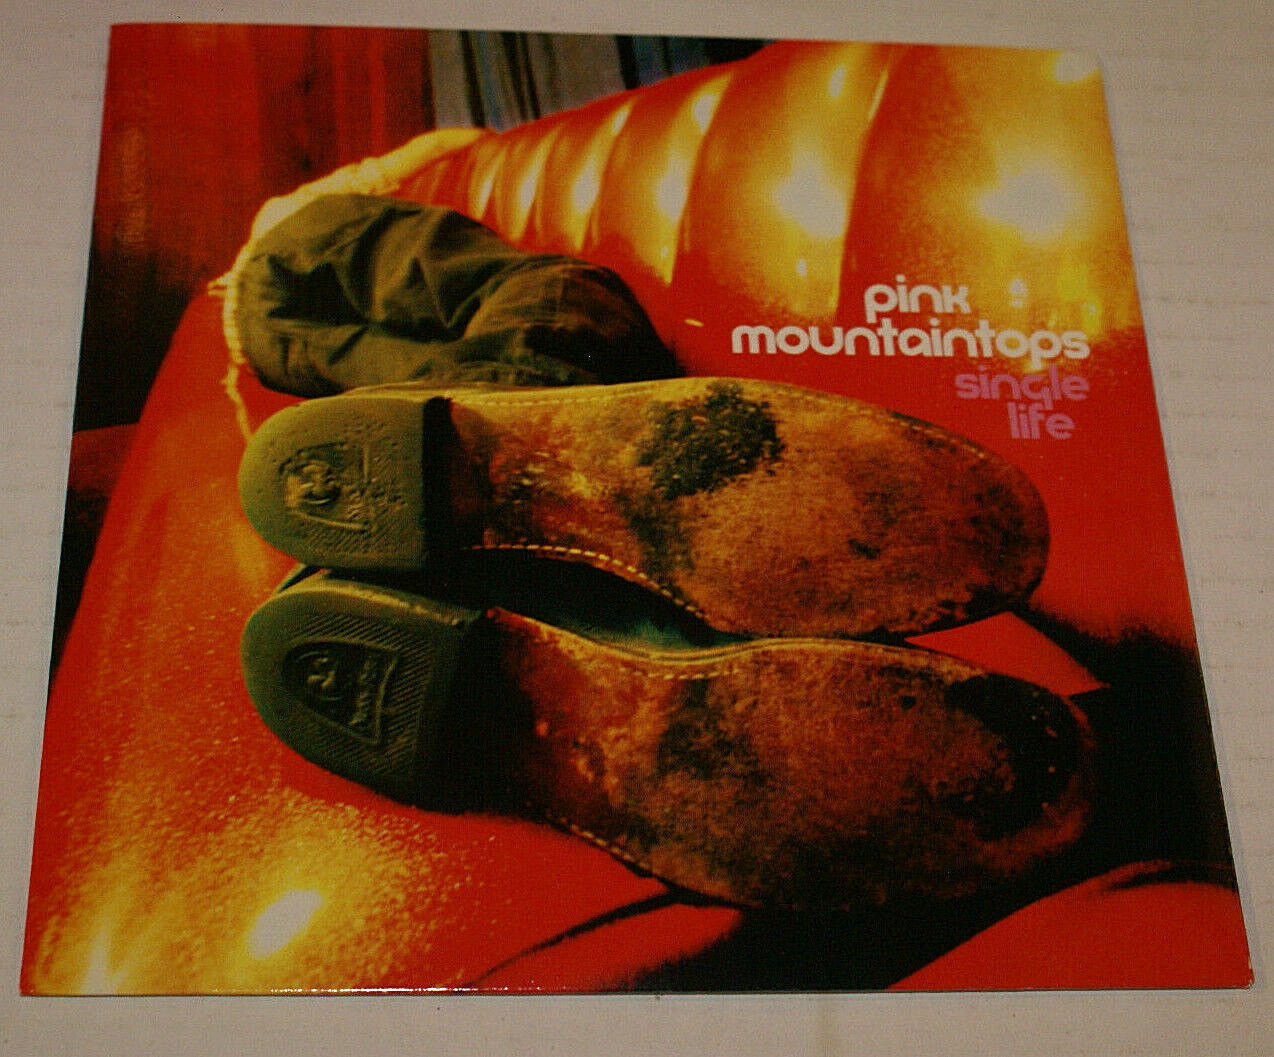  Pink Mountaintops ‎– Single Life Rare Non Tracks Single 7" Record 2007 Nm/Nm 